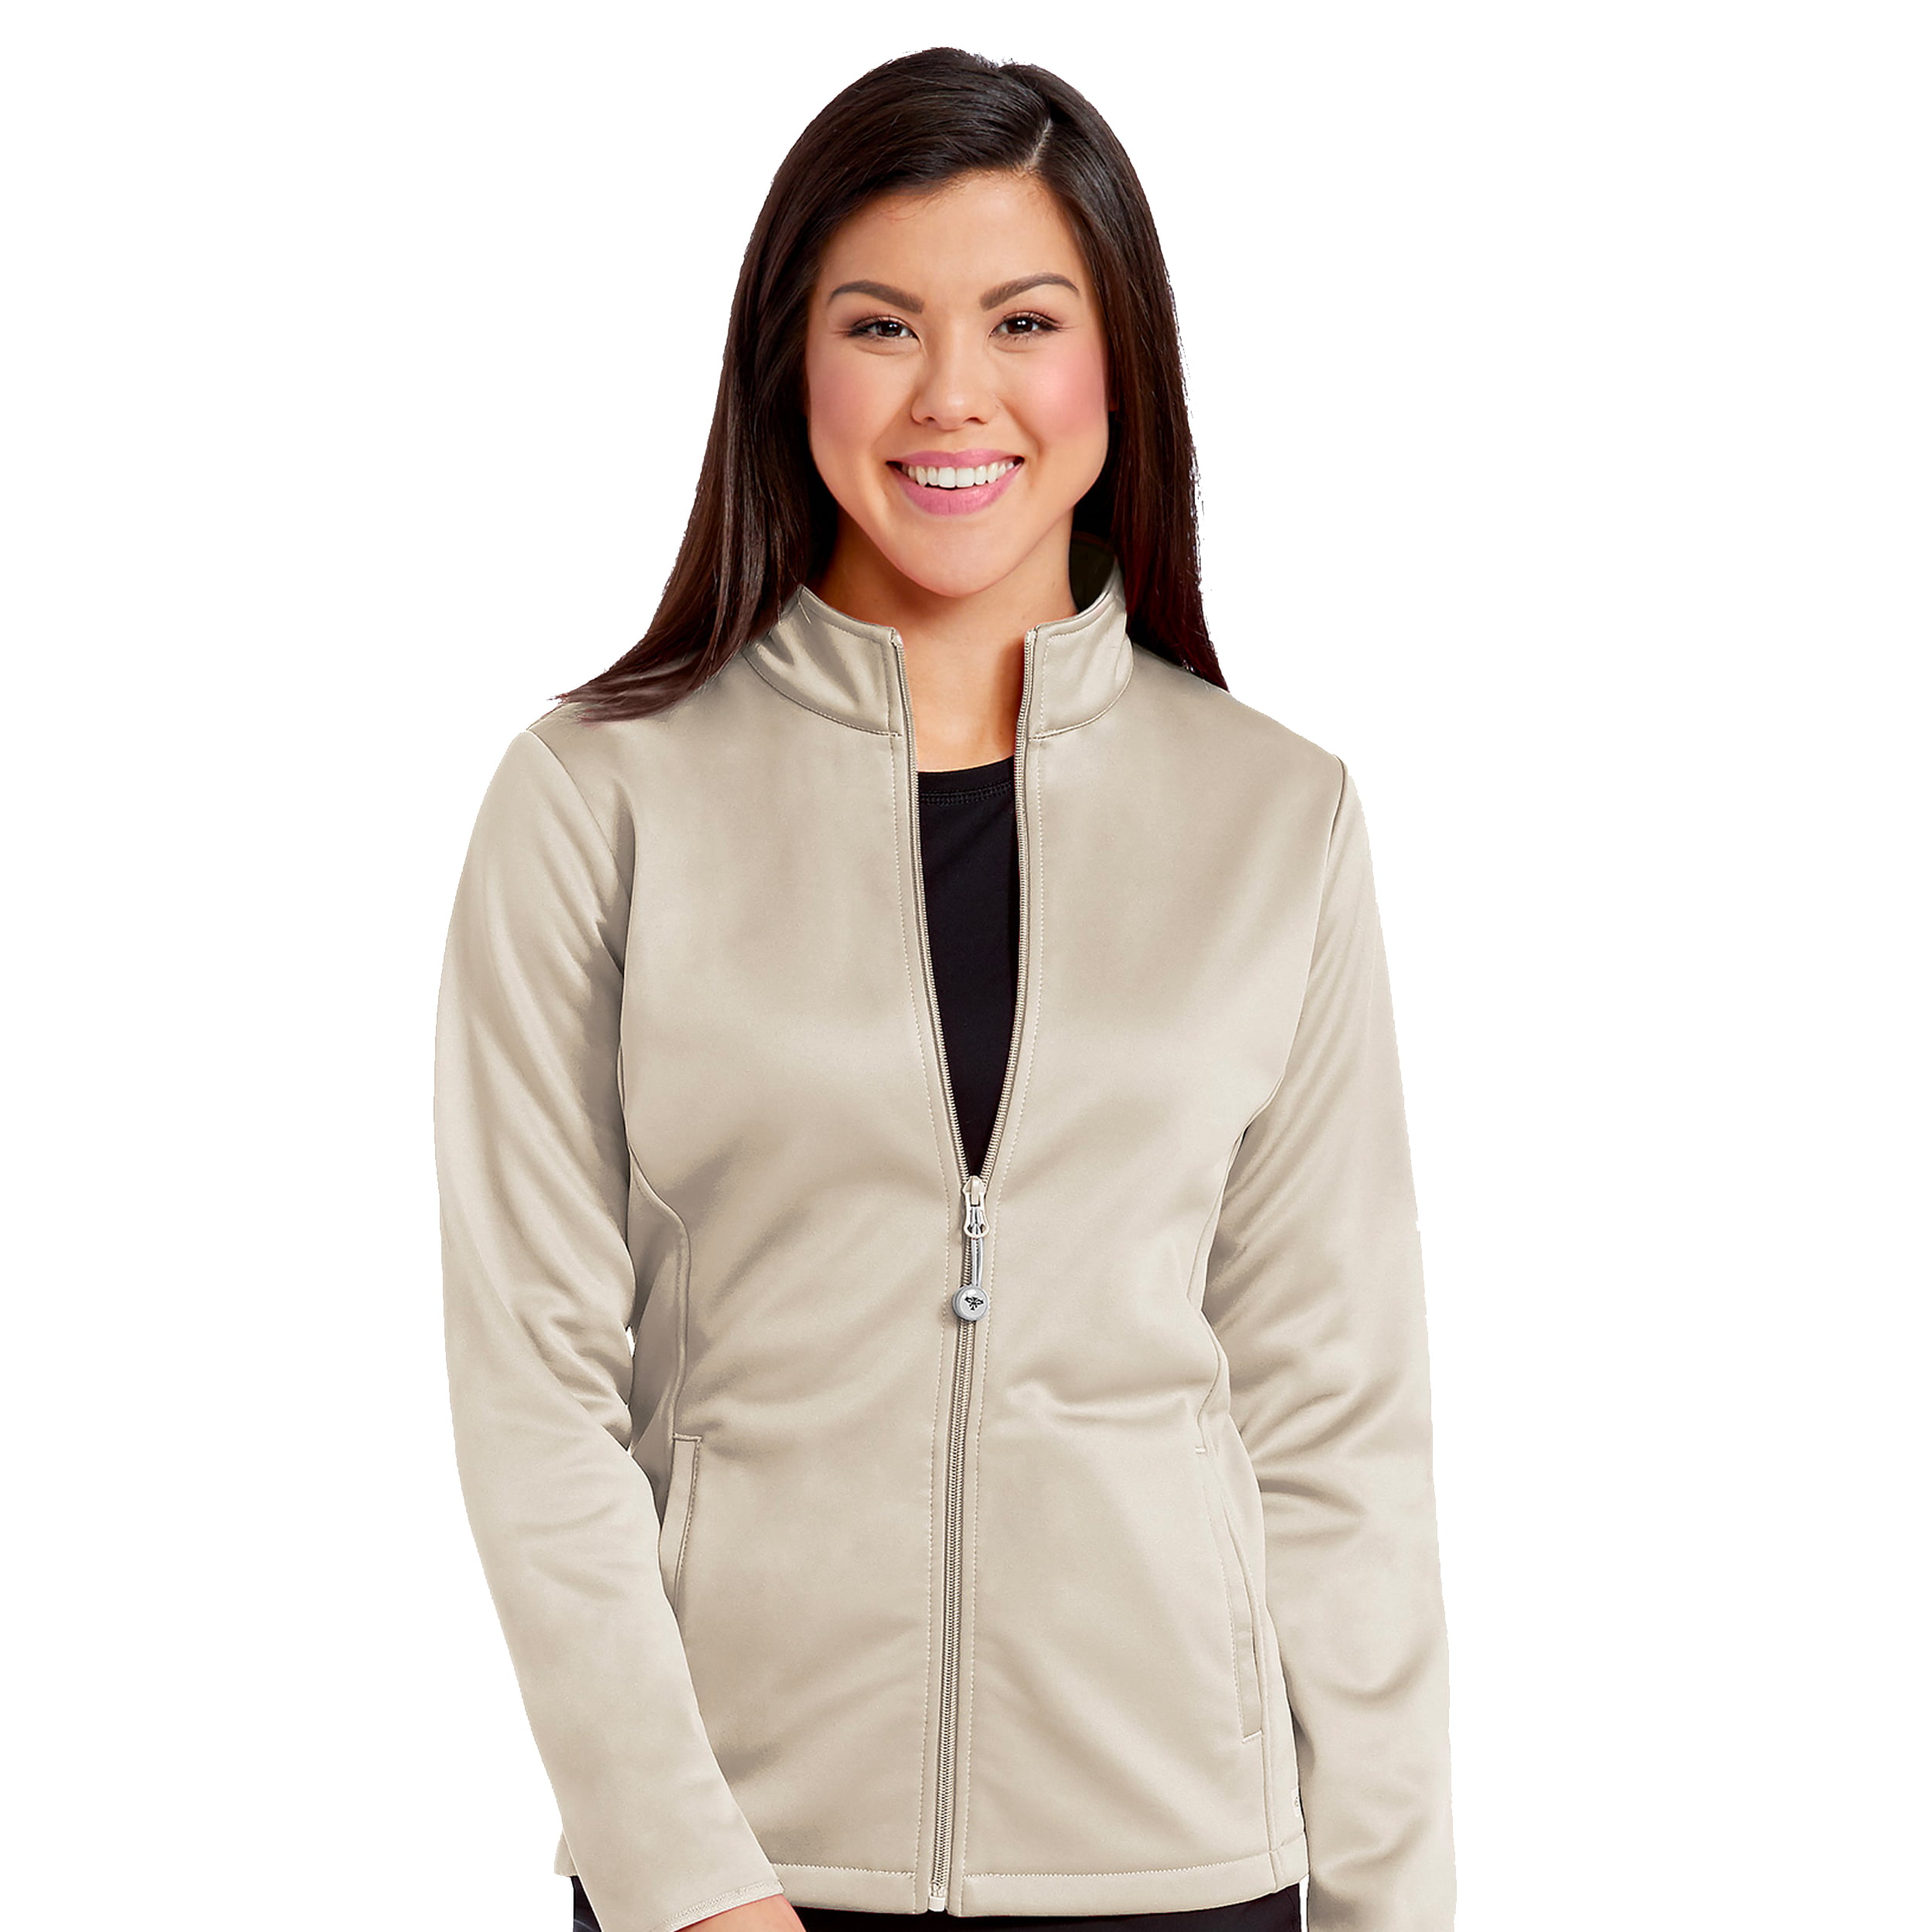 Med Couture Women's Bonded Fleece Med Tech Warm up Jacket 8684